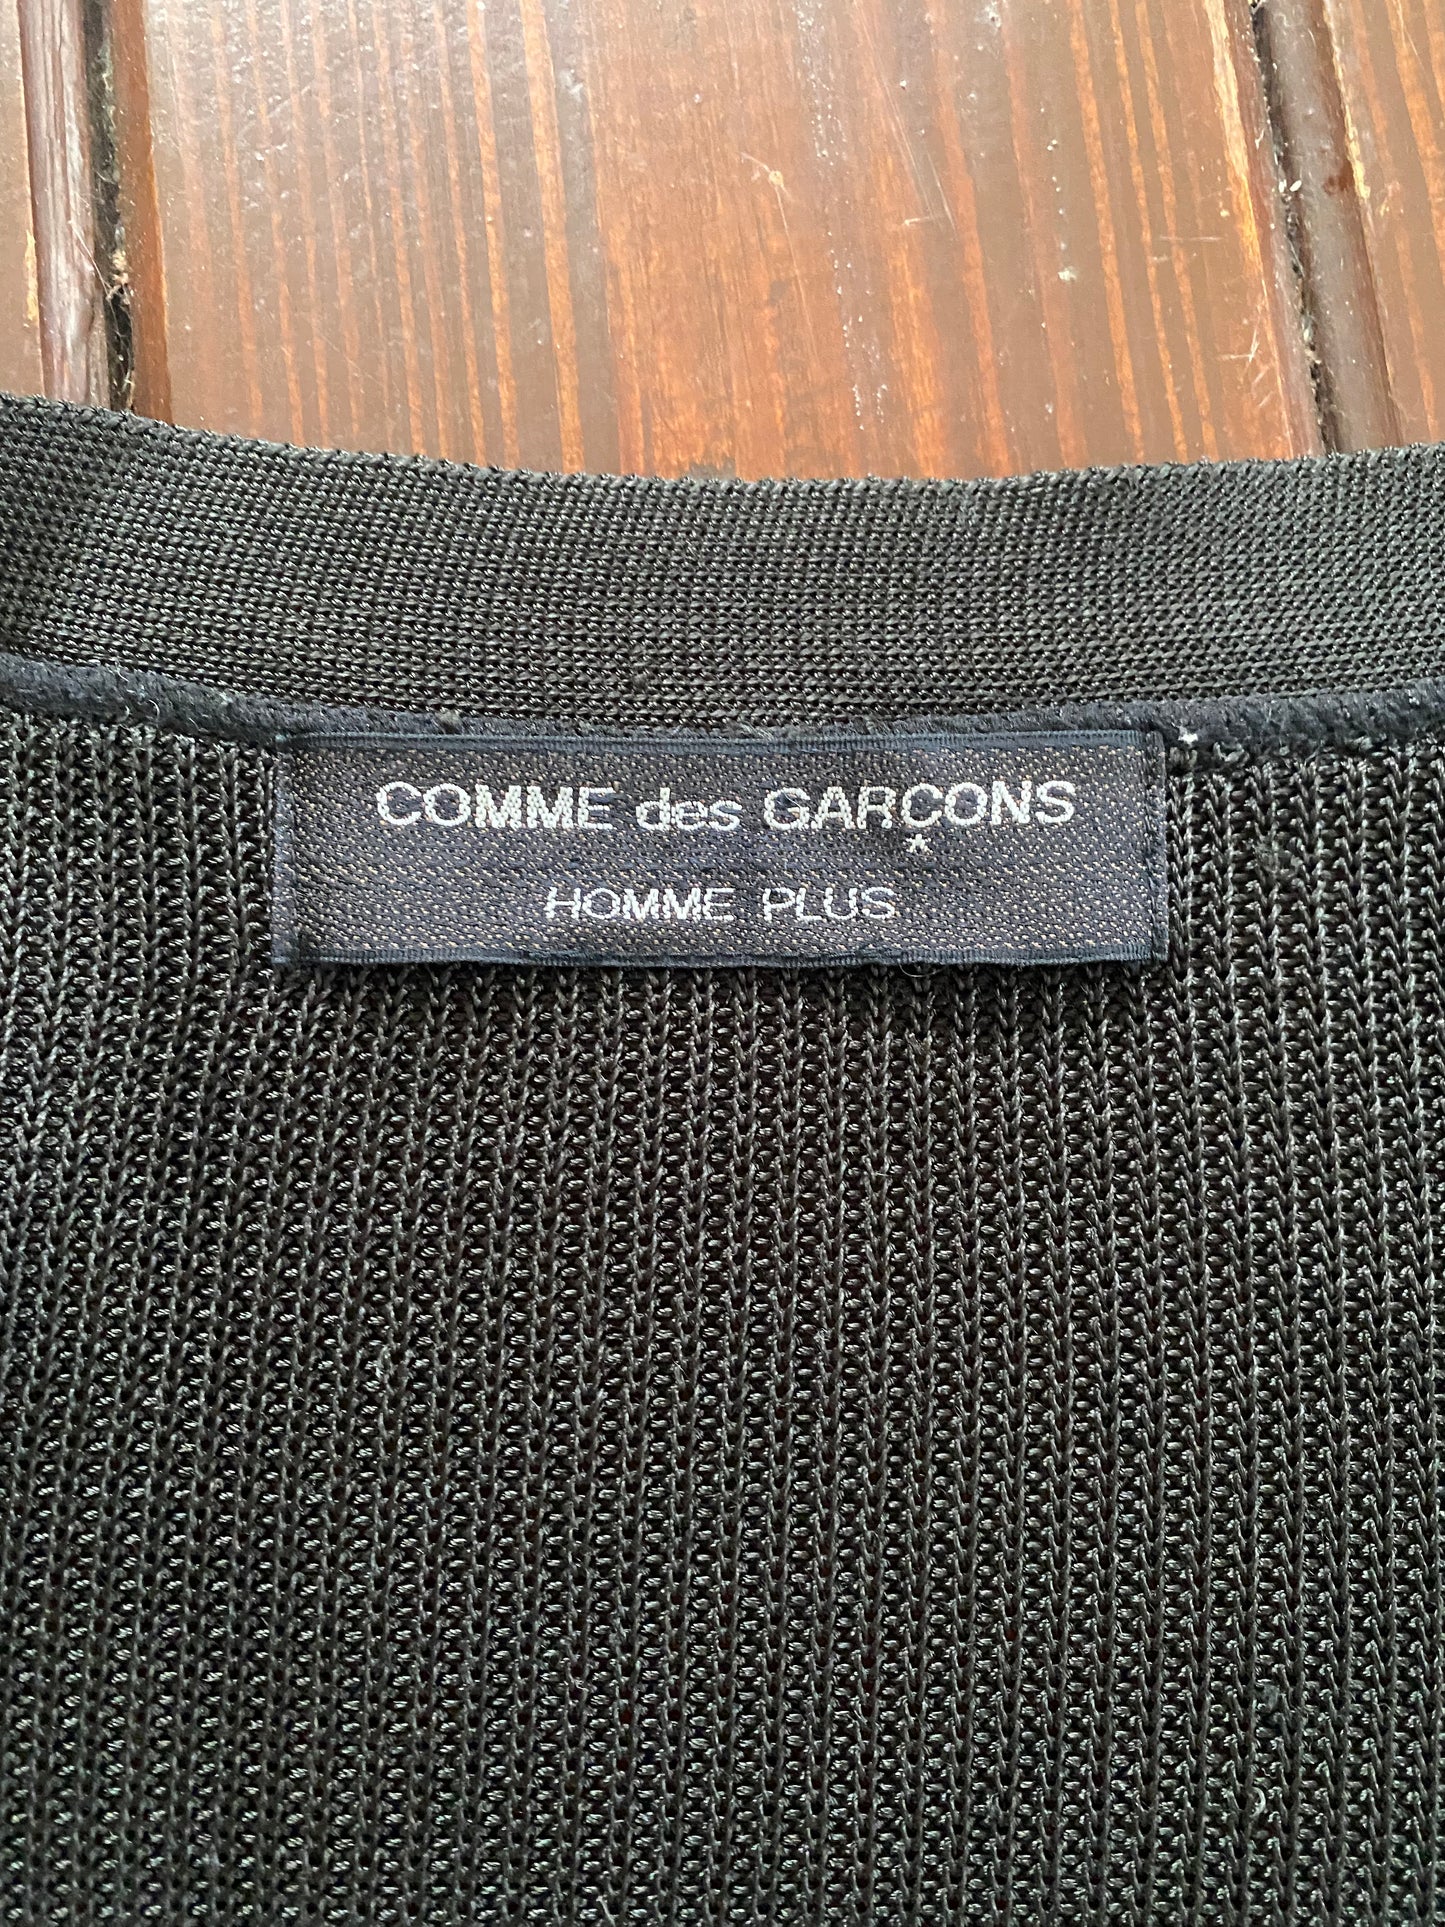 Comme Des Garçonnes Polyester Cardigan FW2000 - Brimm Archive Wardrobe Research